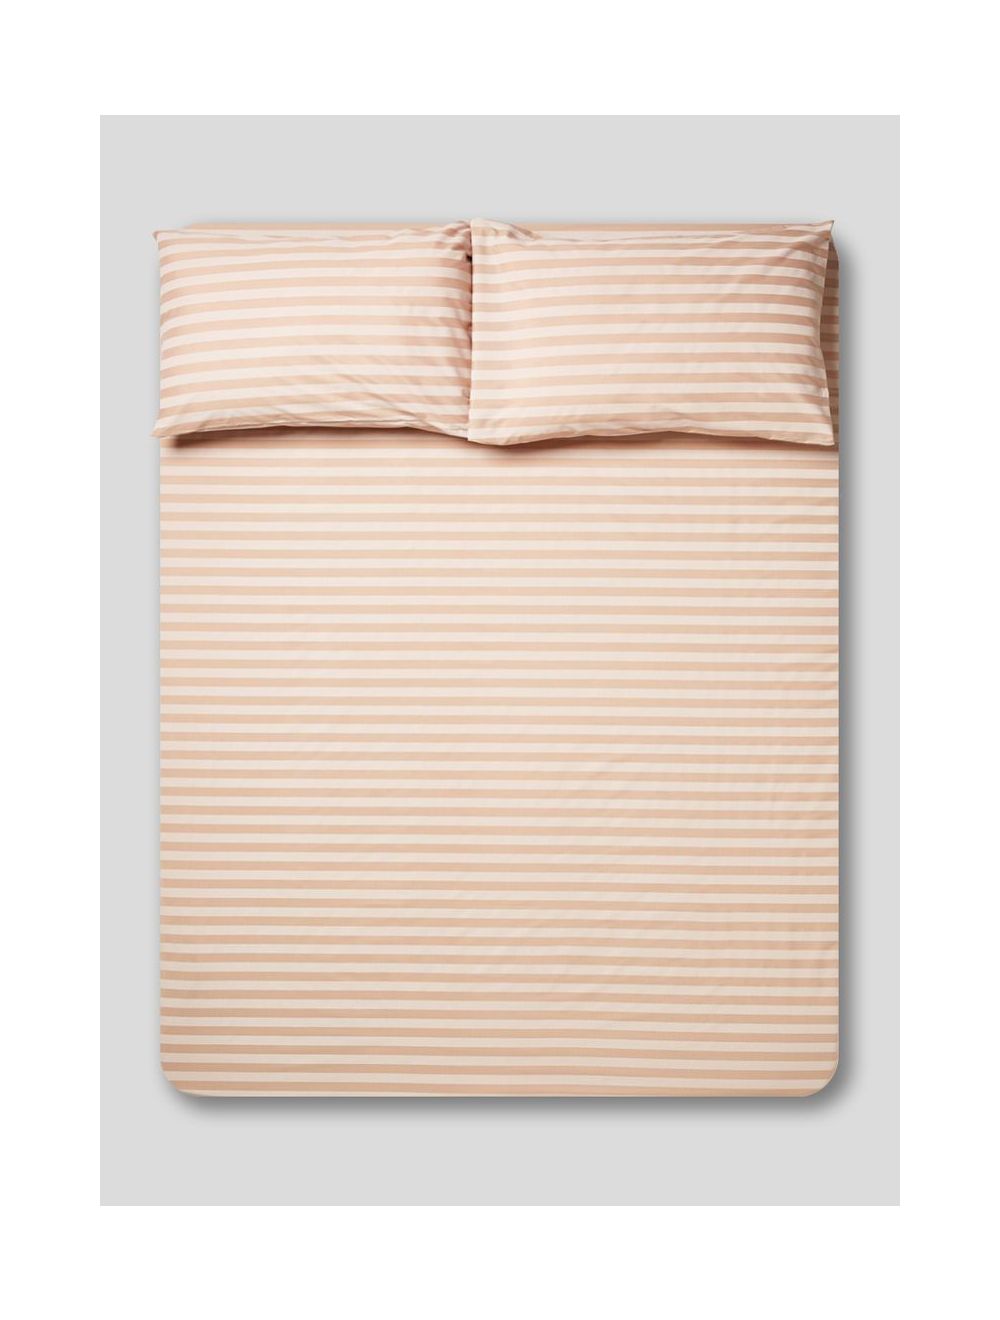 Rishahome 3-Piece Printed 180 TC Cotton Bedsheet Set Queen Size, Premium Collection ( 1 Bedsheet + 2 Pillow Cases)Gilt Stripes-4BSPCQ1020